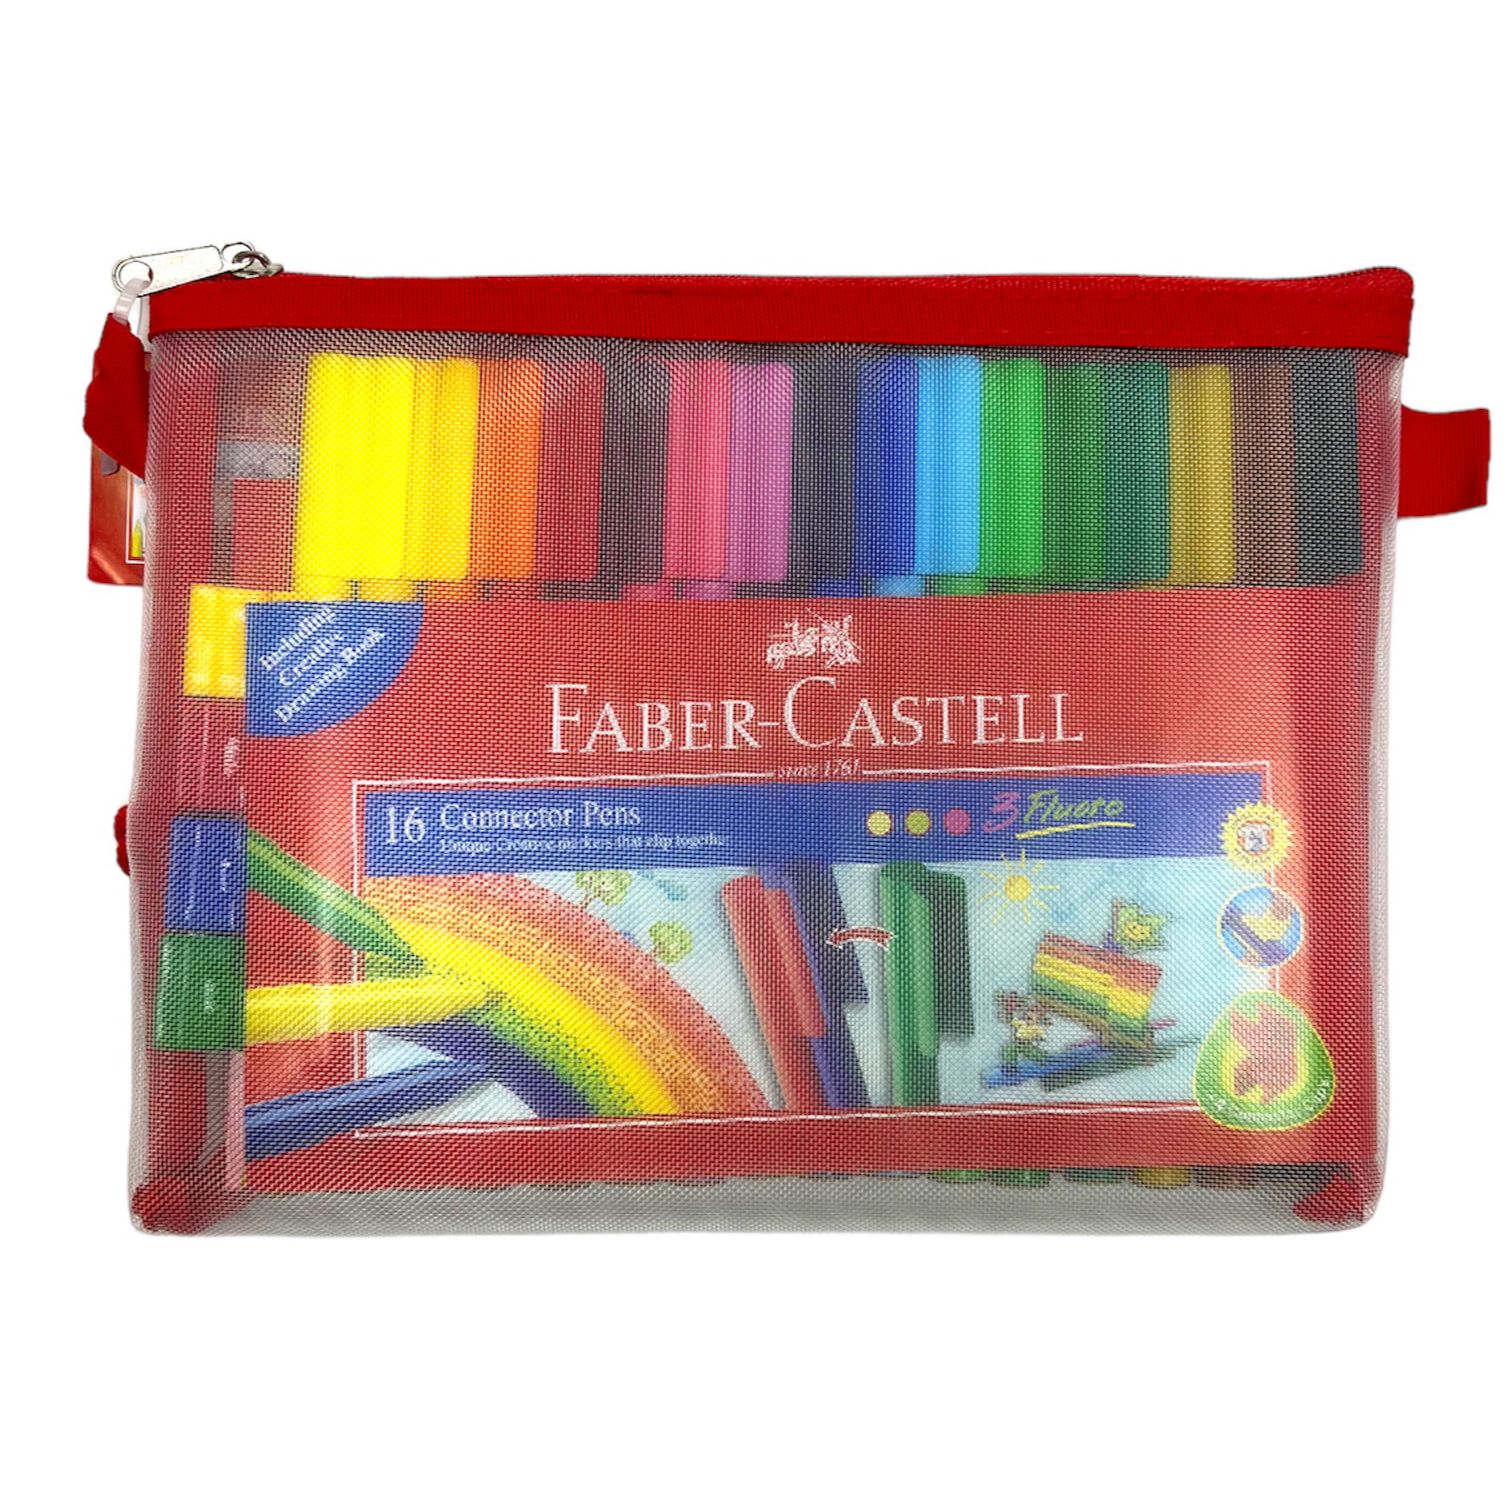 Faber Castell Connector Pens 16 Colors || الوان شينية فيبر كاستل ١٦ لون كونيكتر